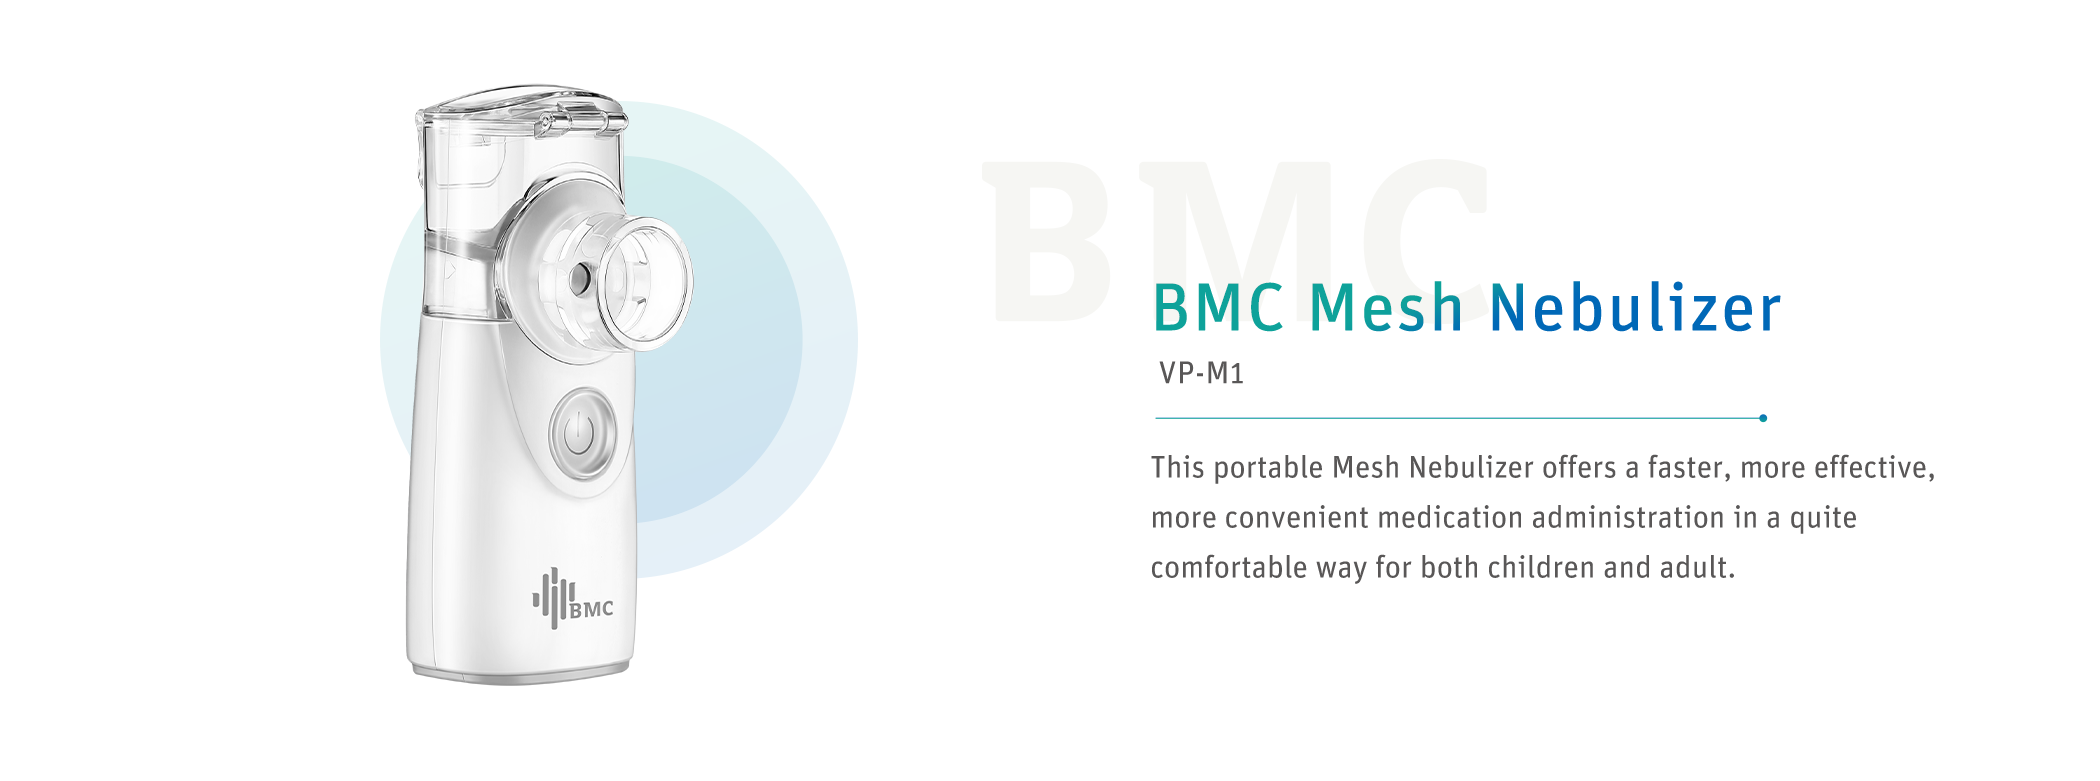 BMC Mesh Nebulizer